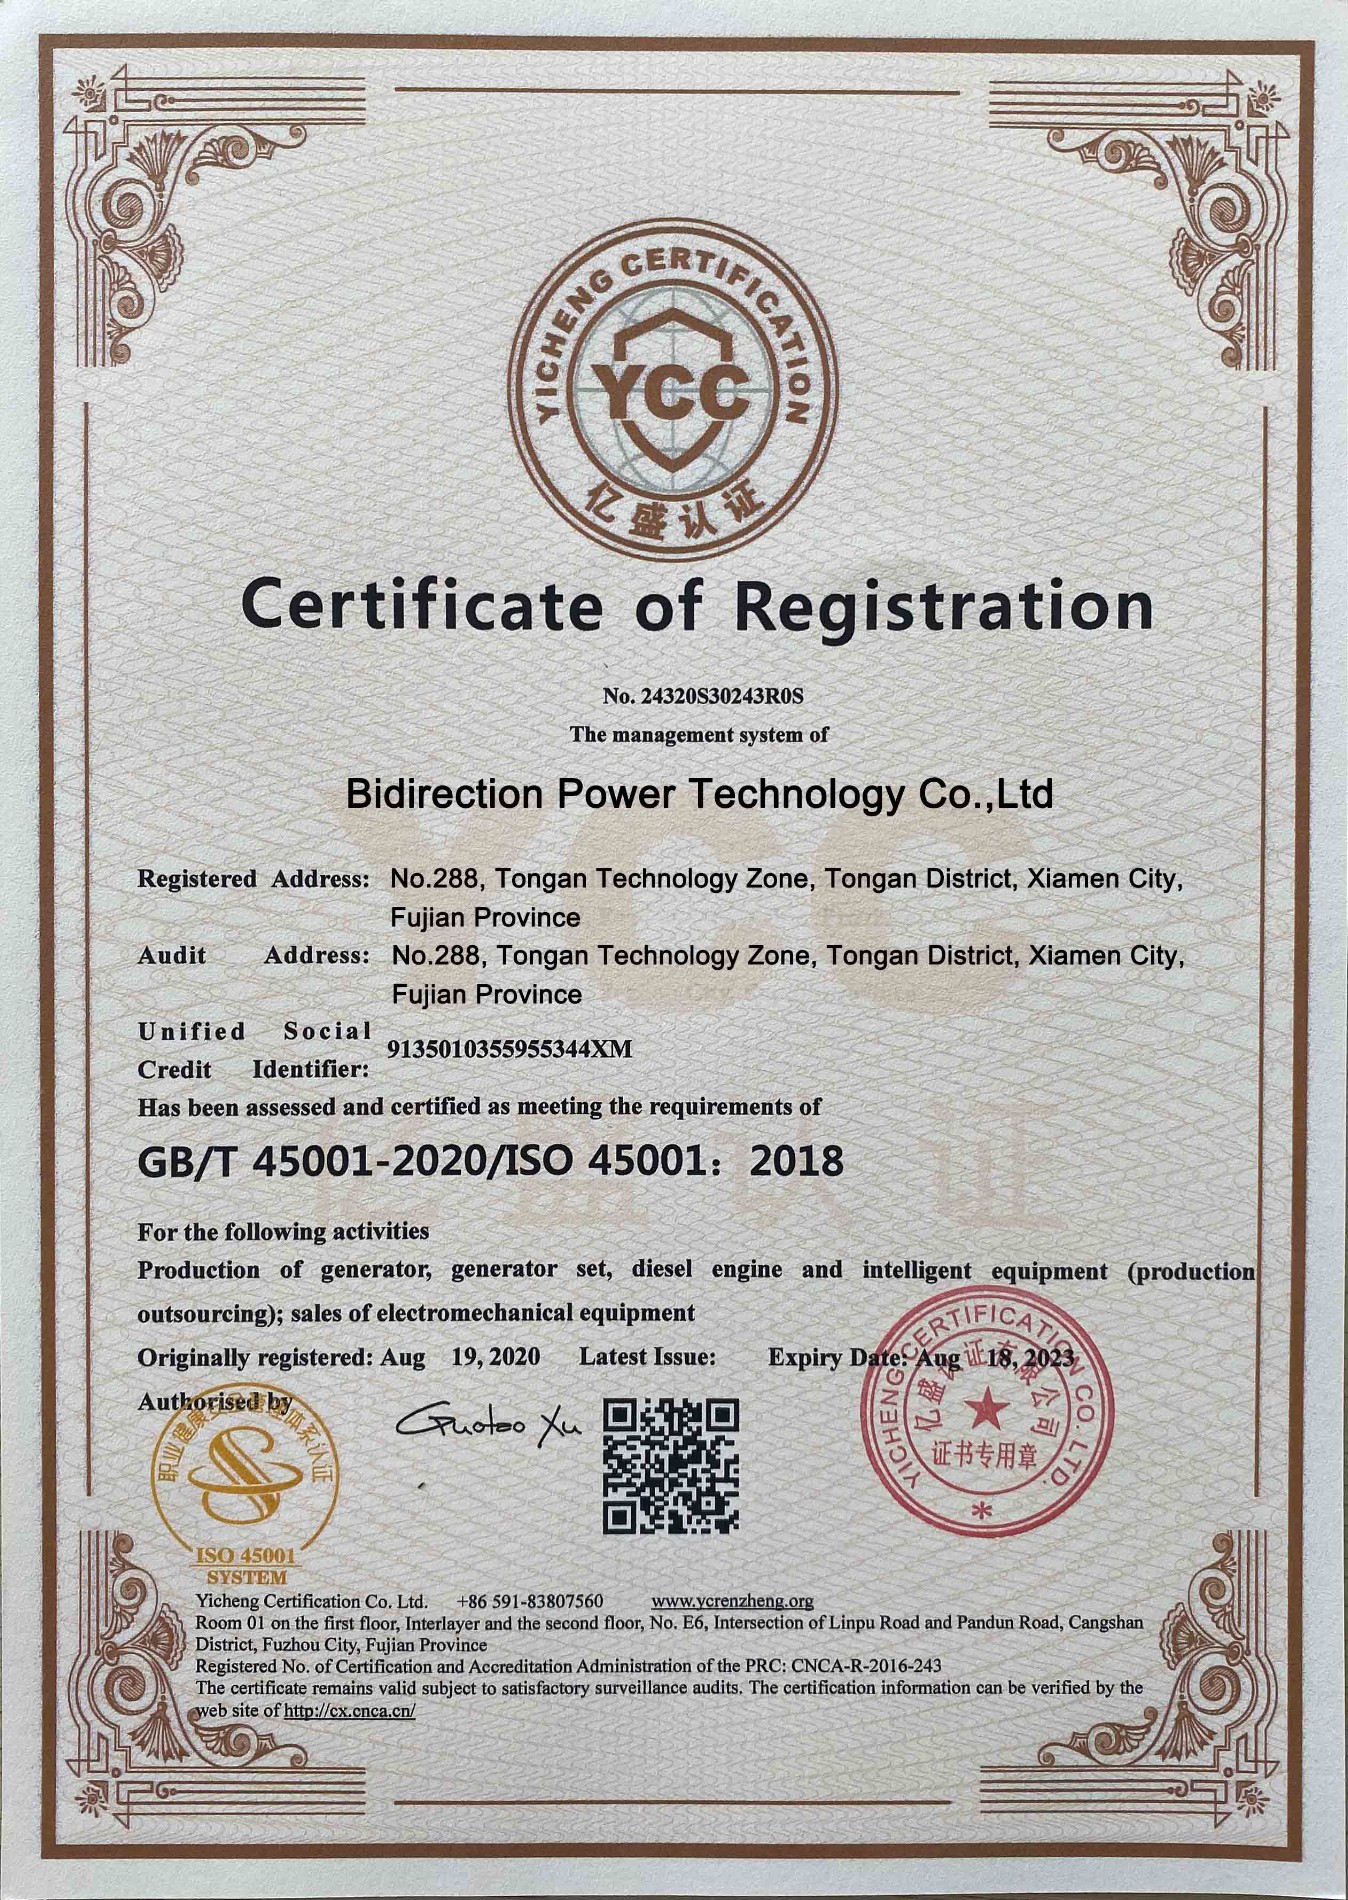 Technologie Bidirection Power povolena osvědčením o registraci GB / T45001-2020 / ISO 45001: 2018